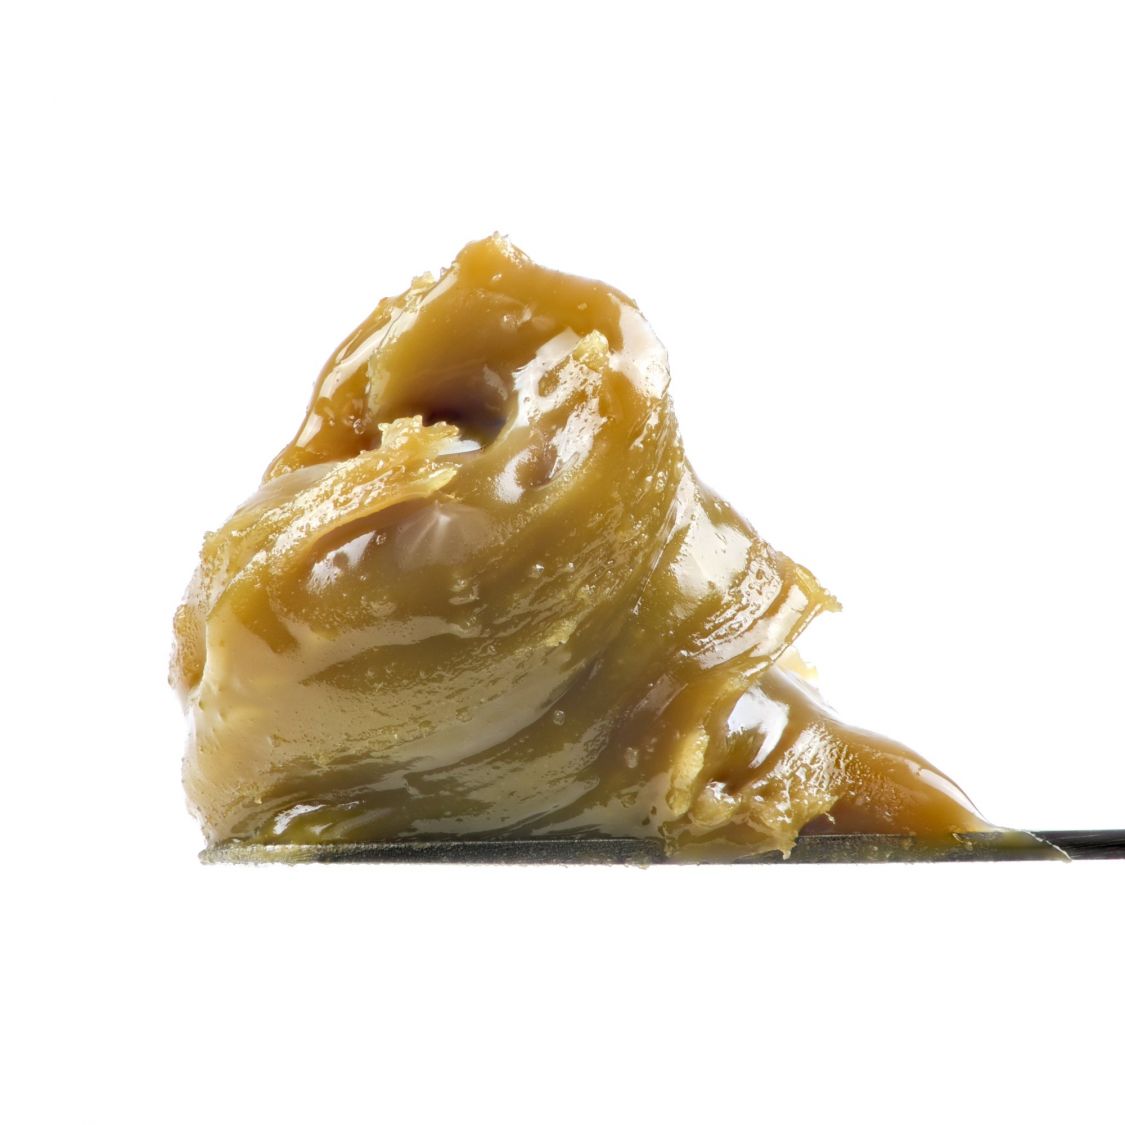 SUPREME GAS Peanut Butter Rosin Concentrates Rosin Budder